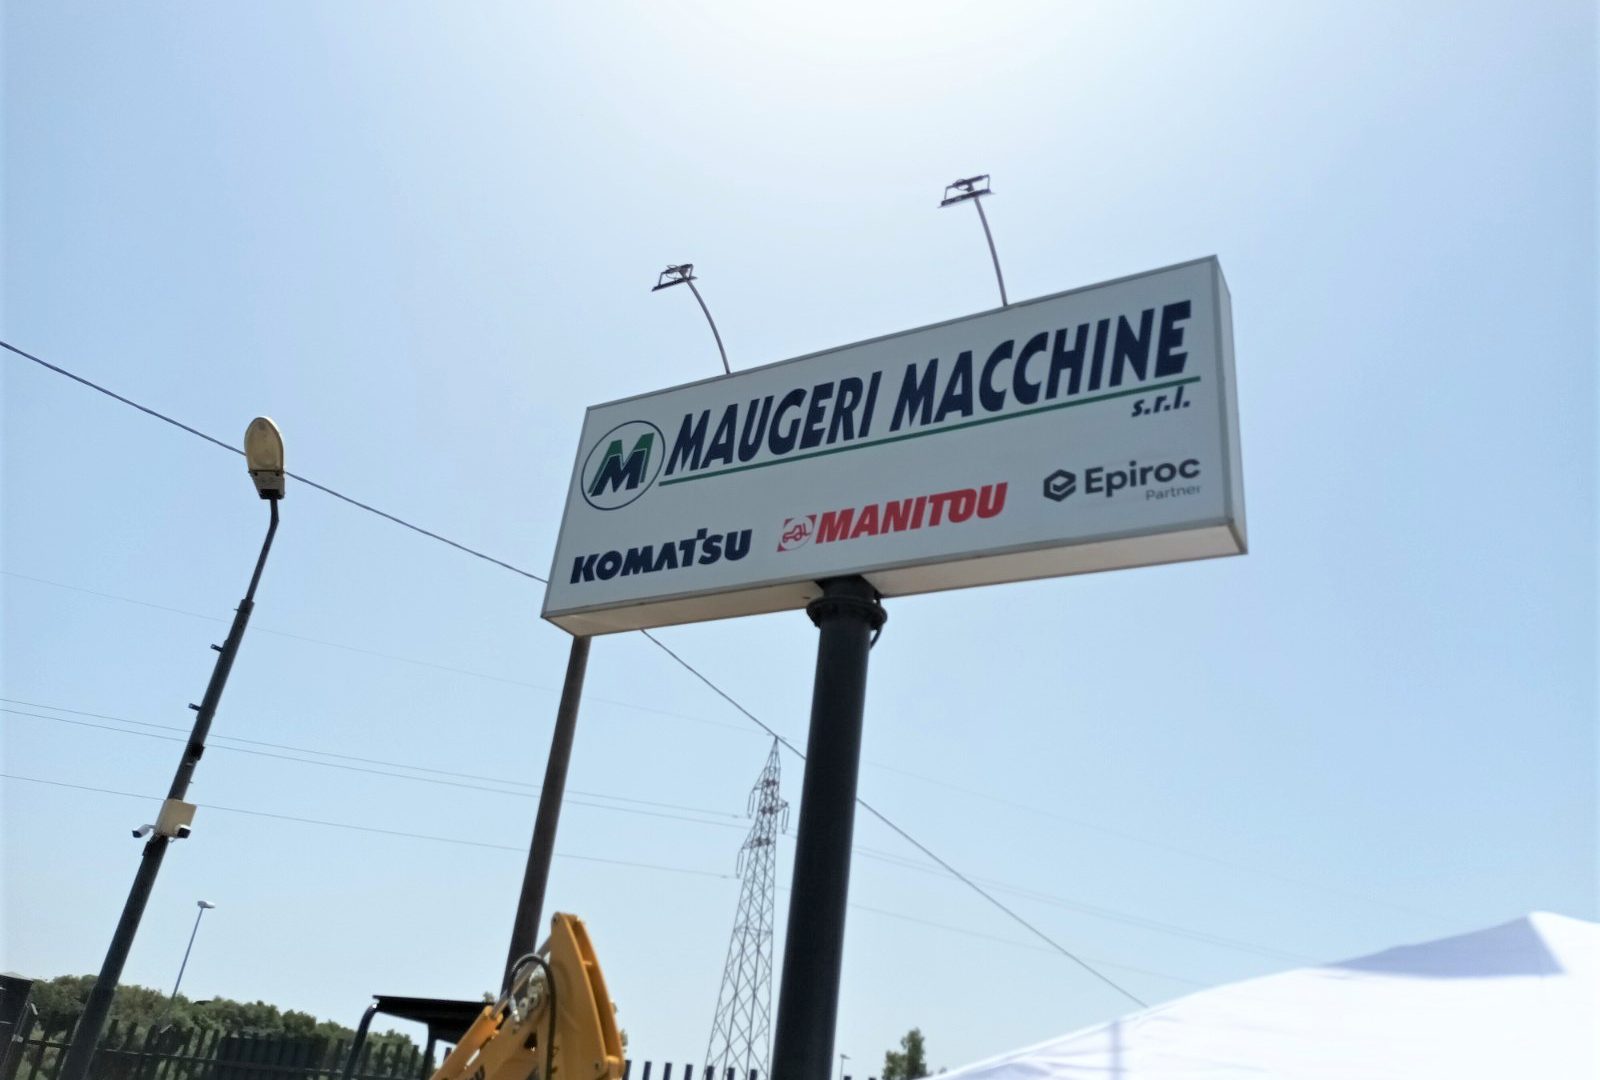 Maugeri Macchine è ora associata al marchio Manitou